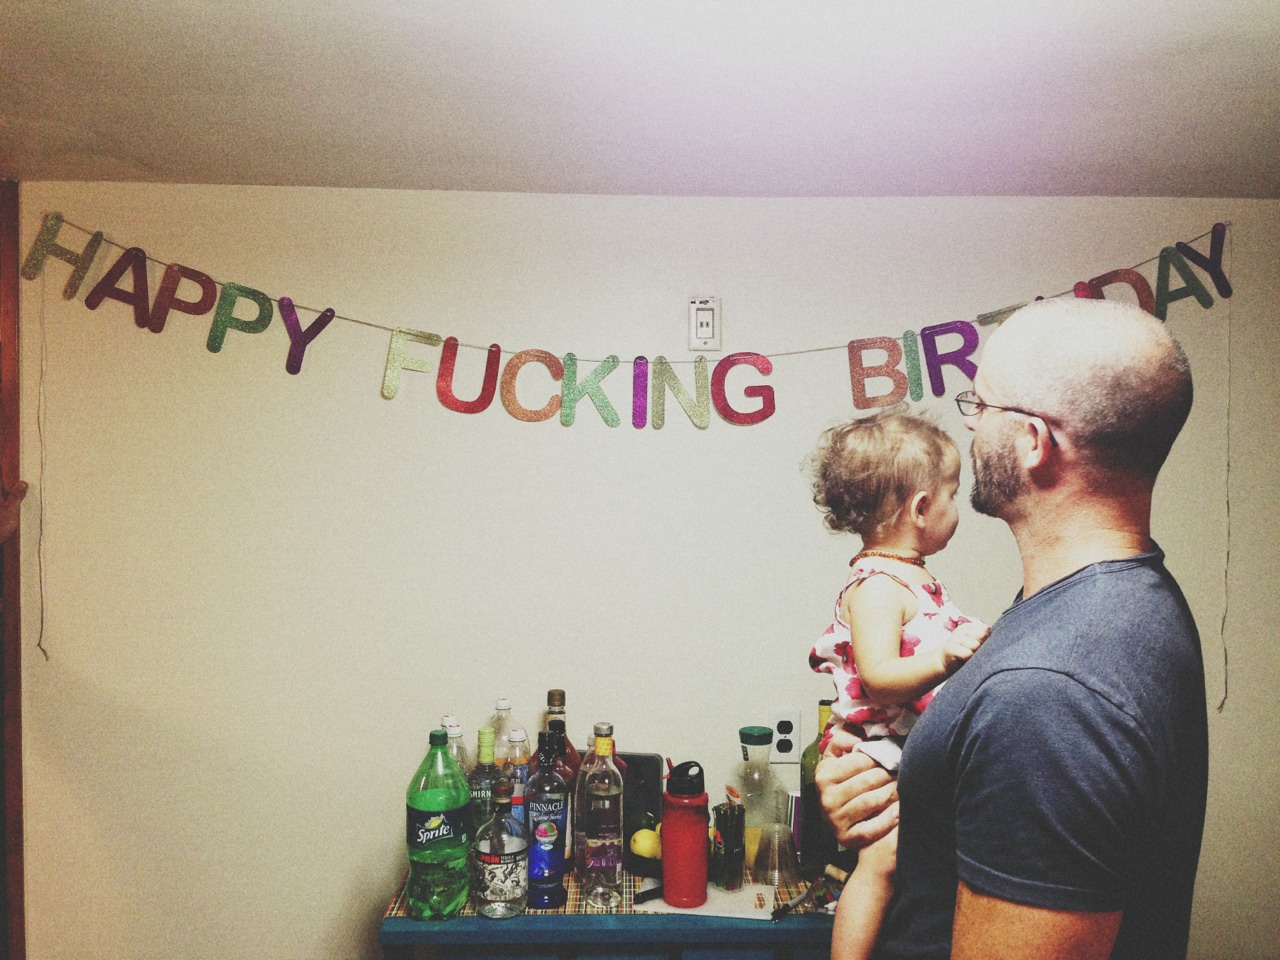 weird photo birthday party - Happy Fuci Way G Bir Pinnacle Sprite